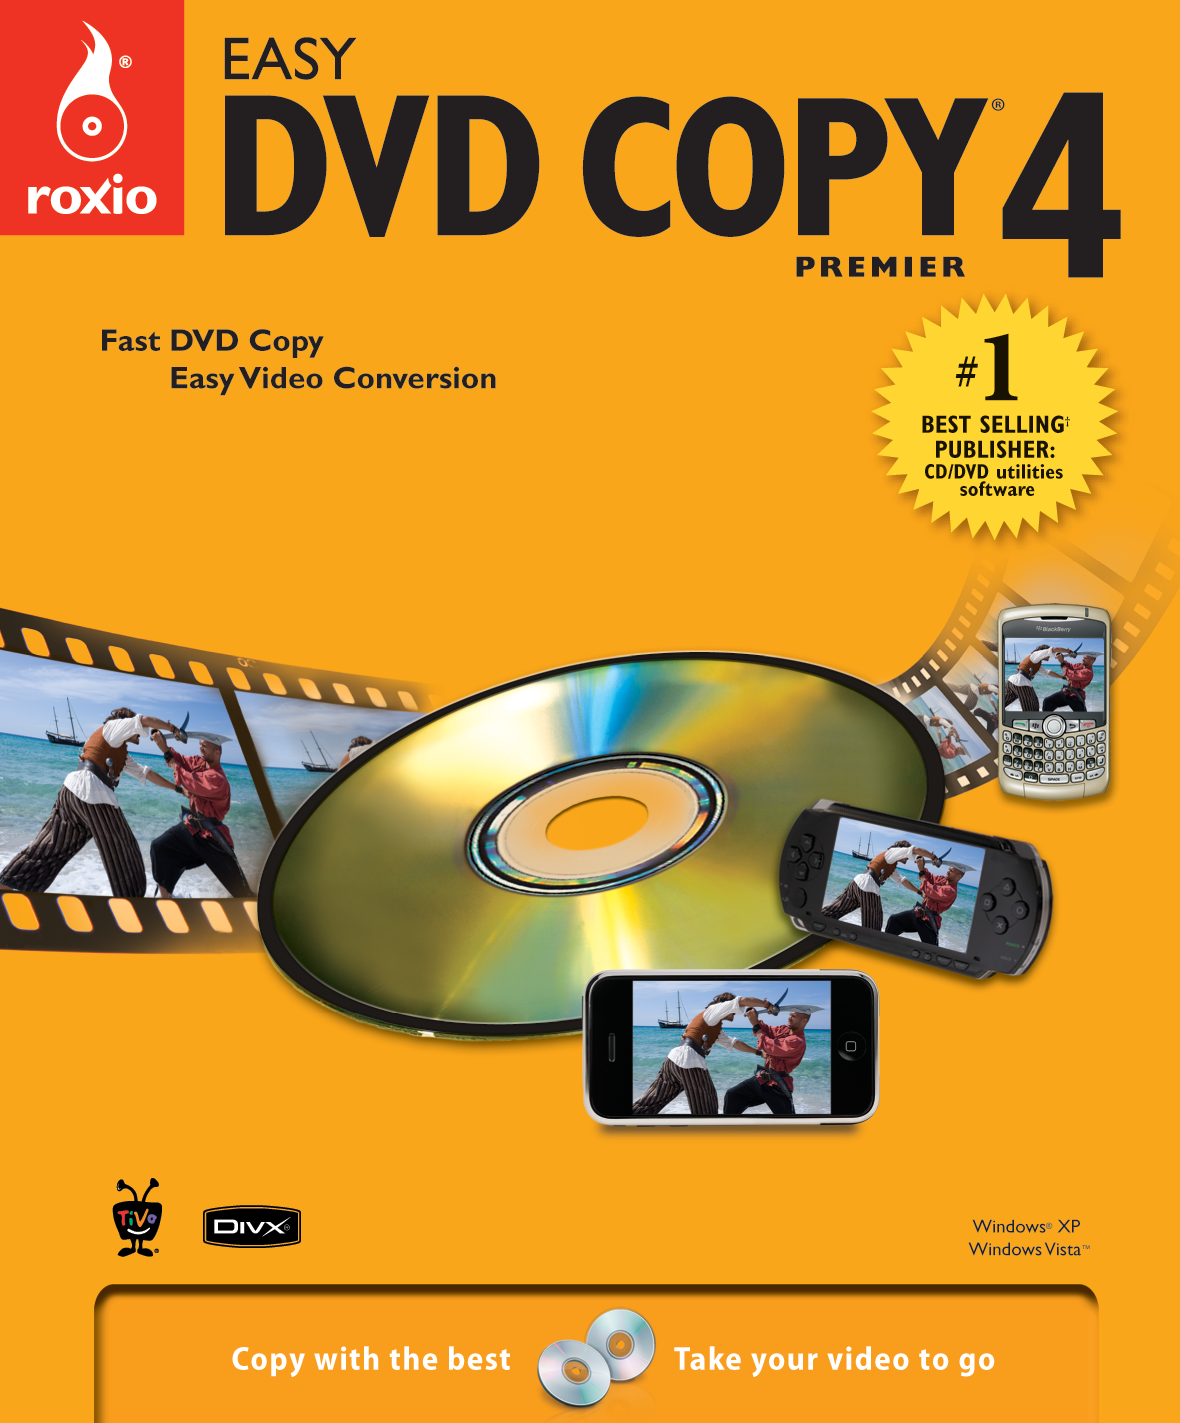 roxio easy vhs to dvd for mac burn dvd